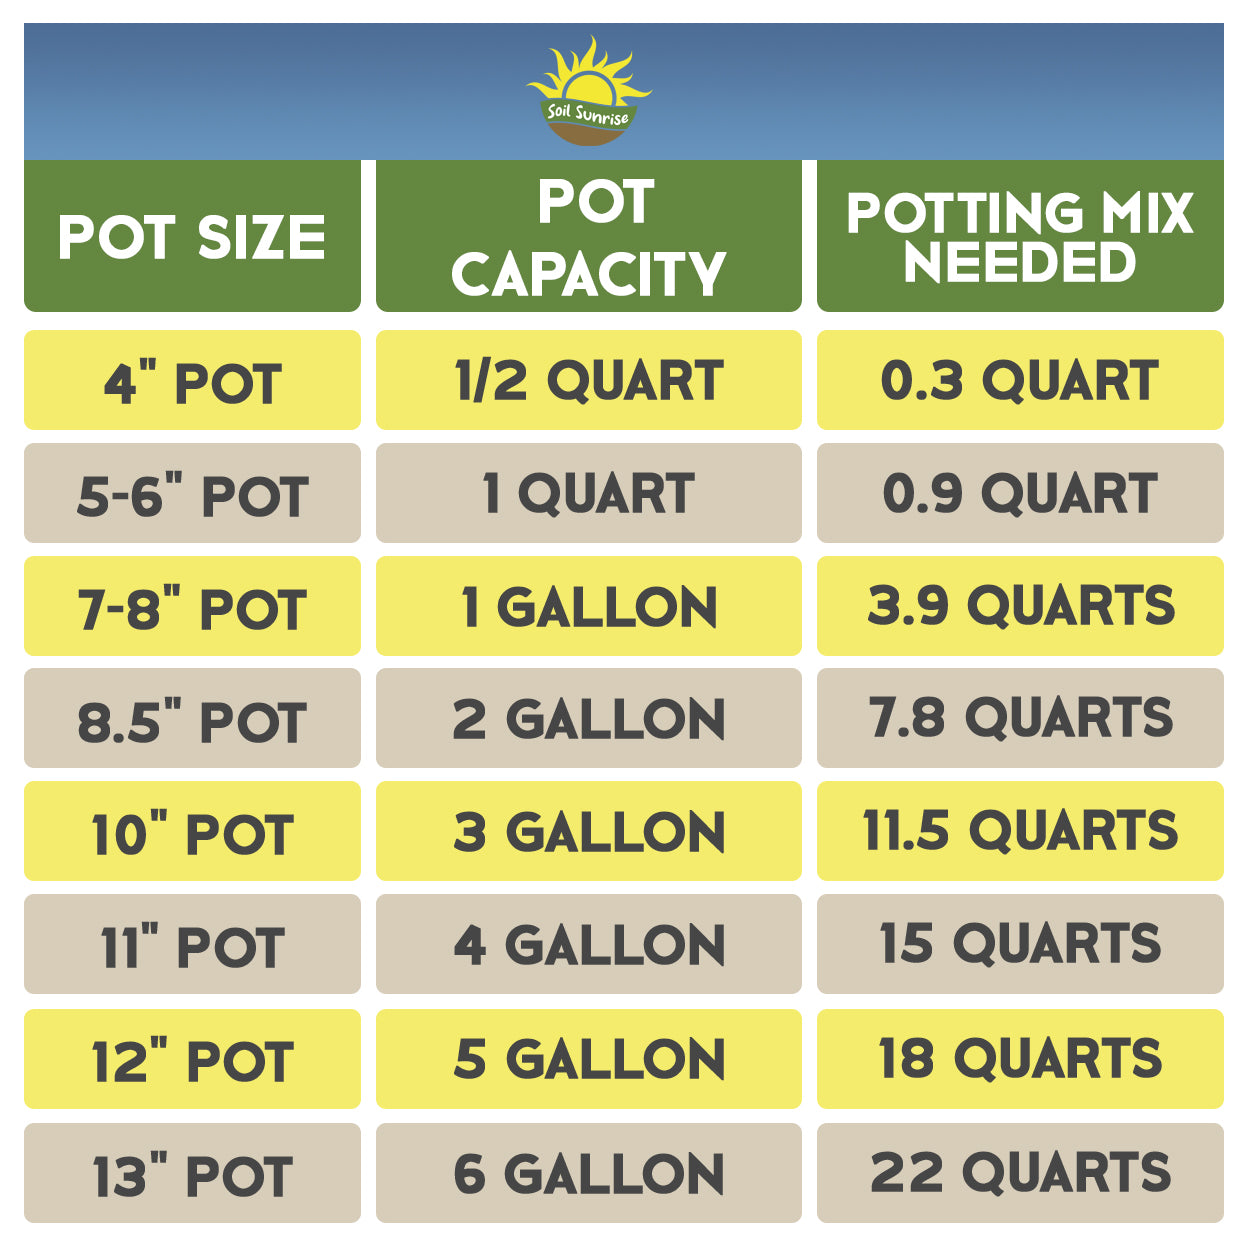 Olive Tree Potting Soil Mix (12 Quarts) - SSKIT234